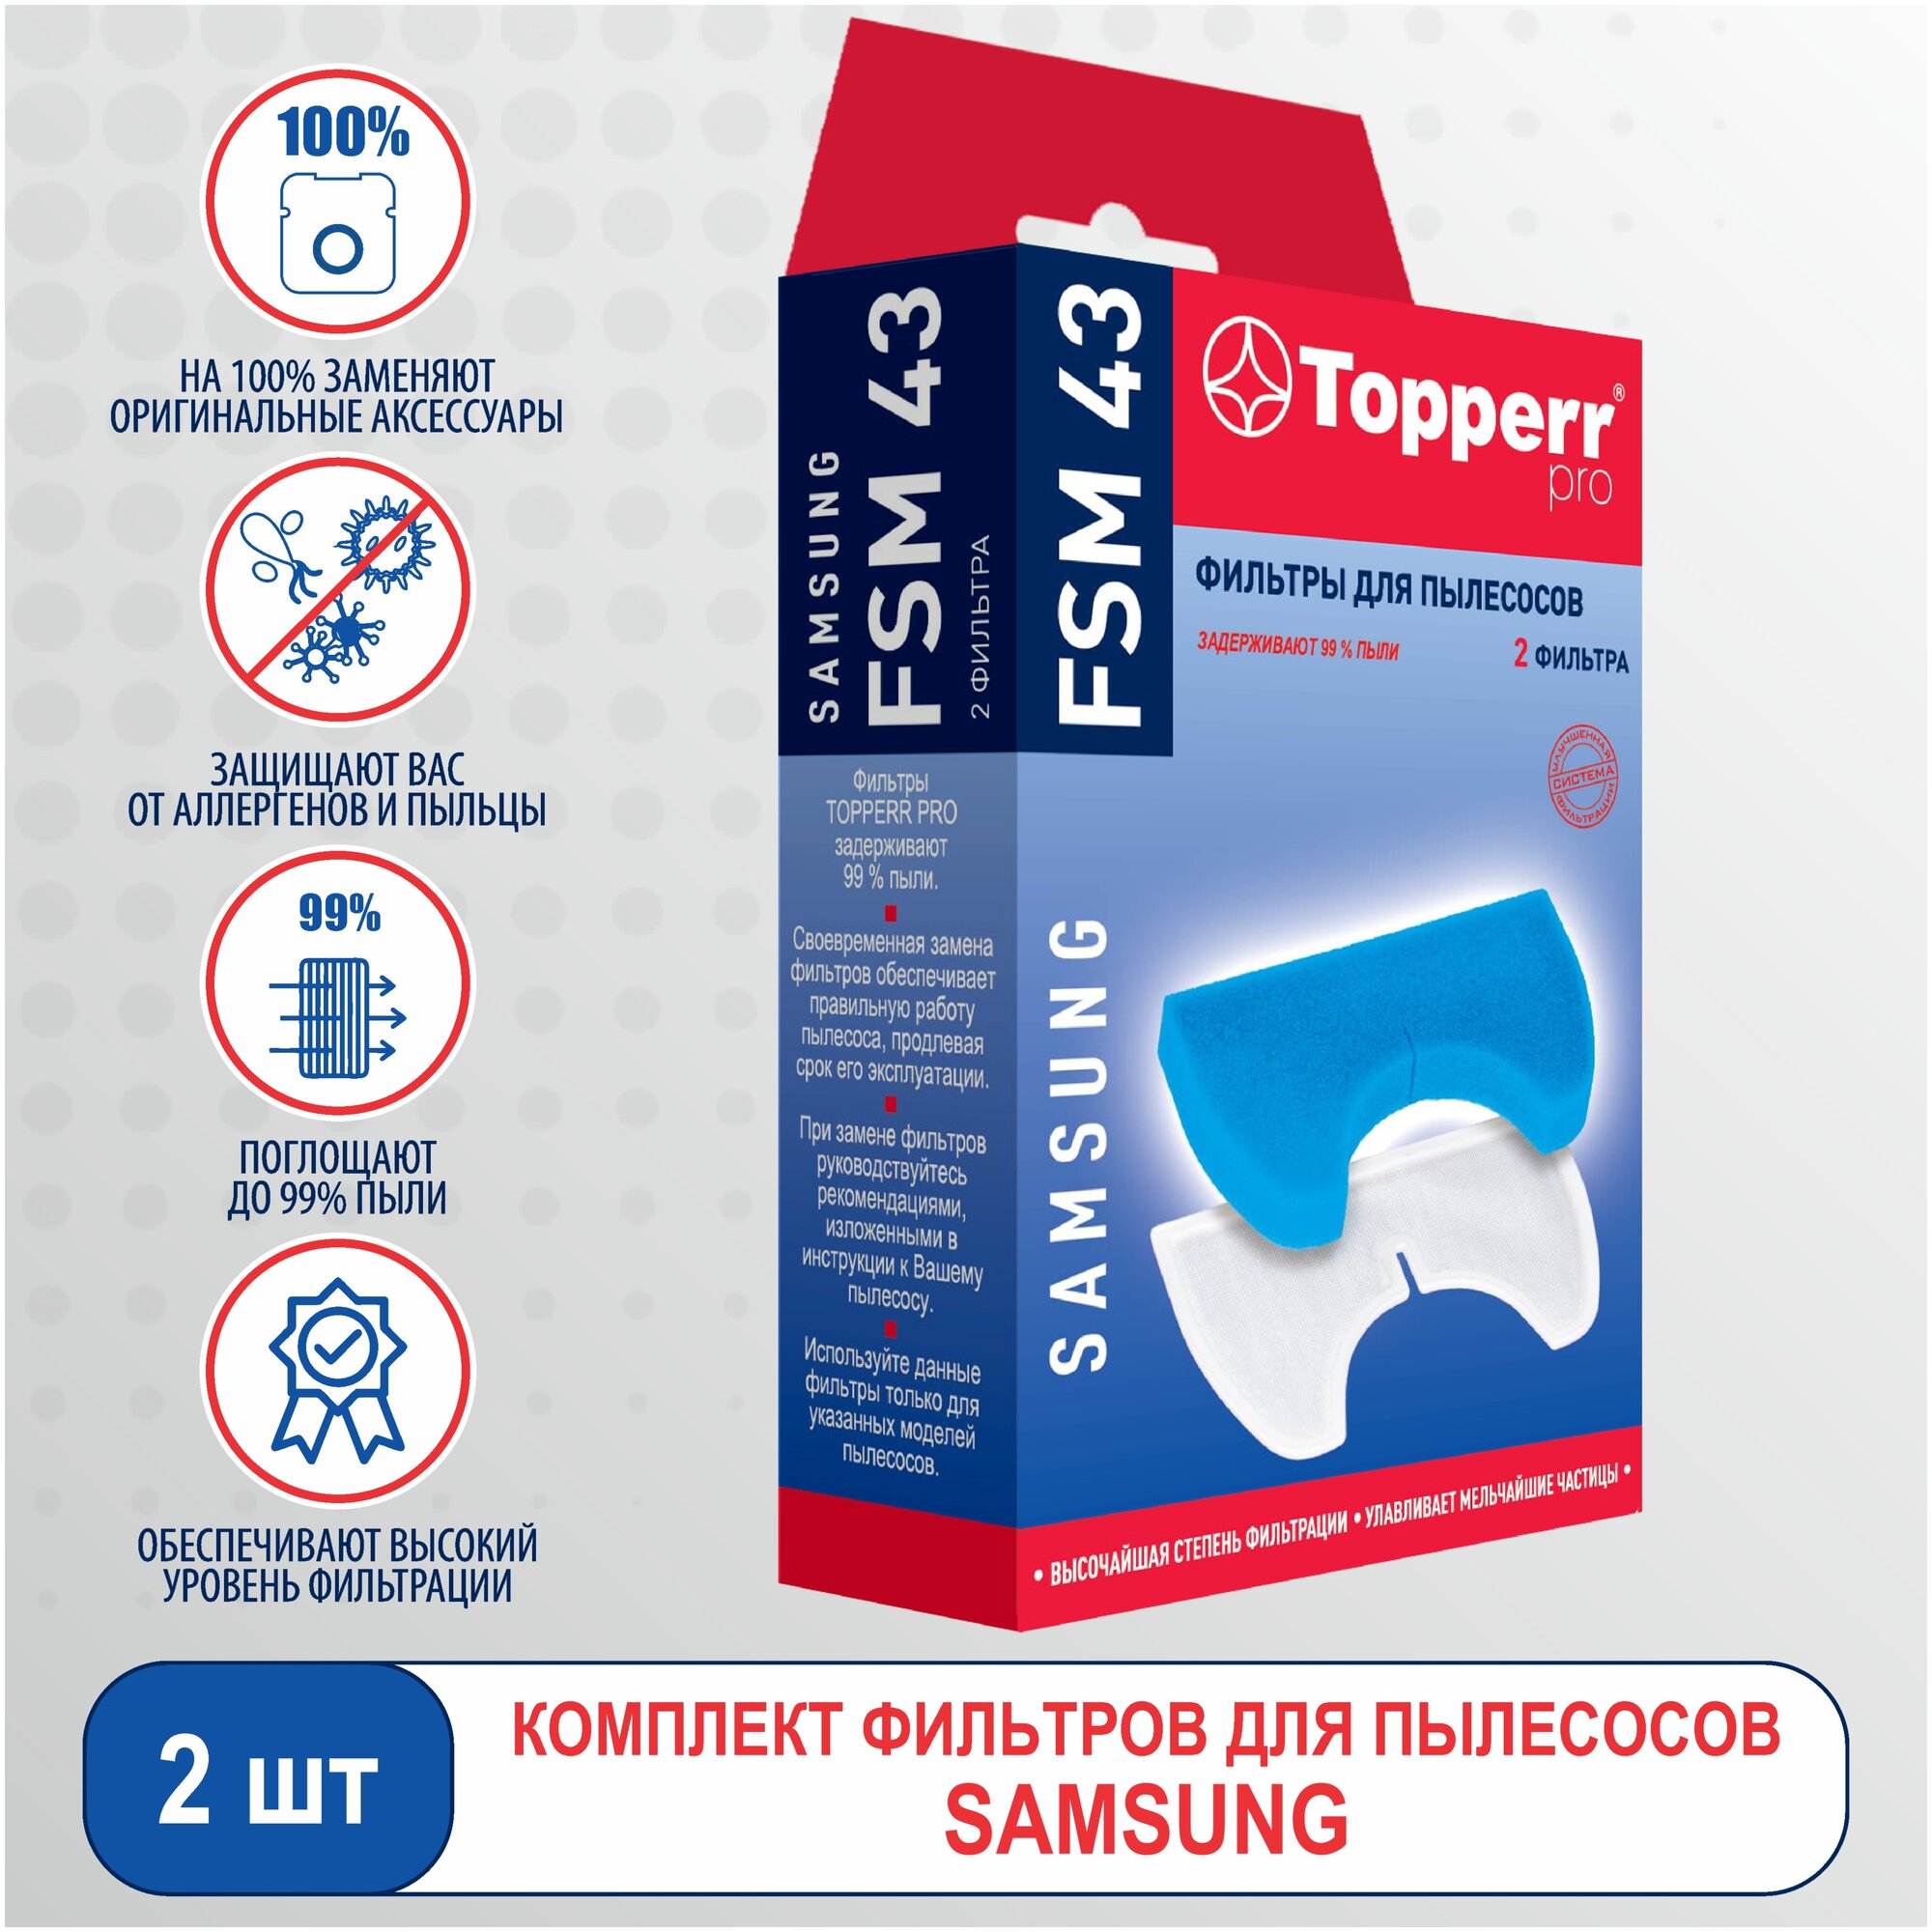 Topperr Фильтр для пылесоса Samsung Air Track SC43, DJ97-00846A - 2 шт, FSM43